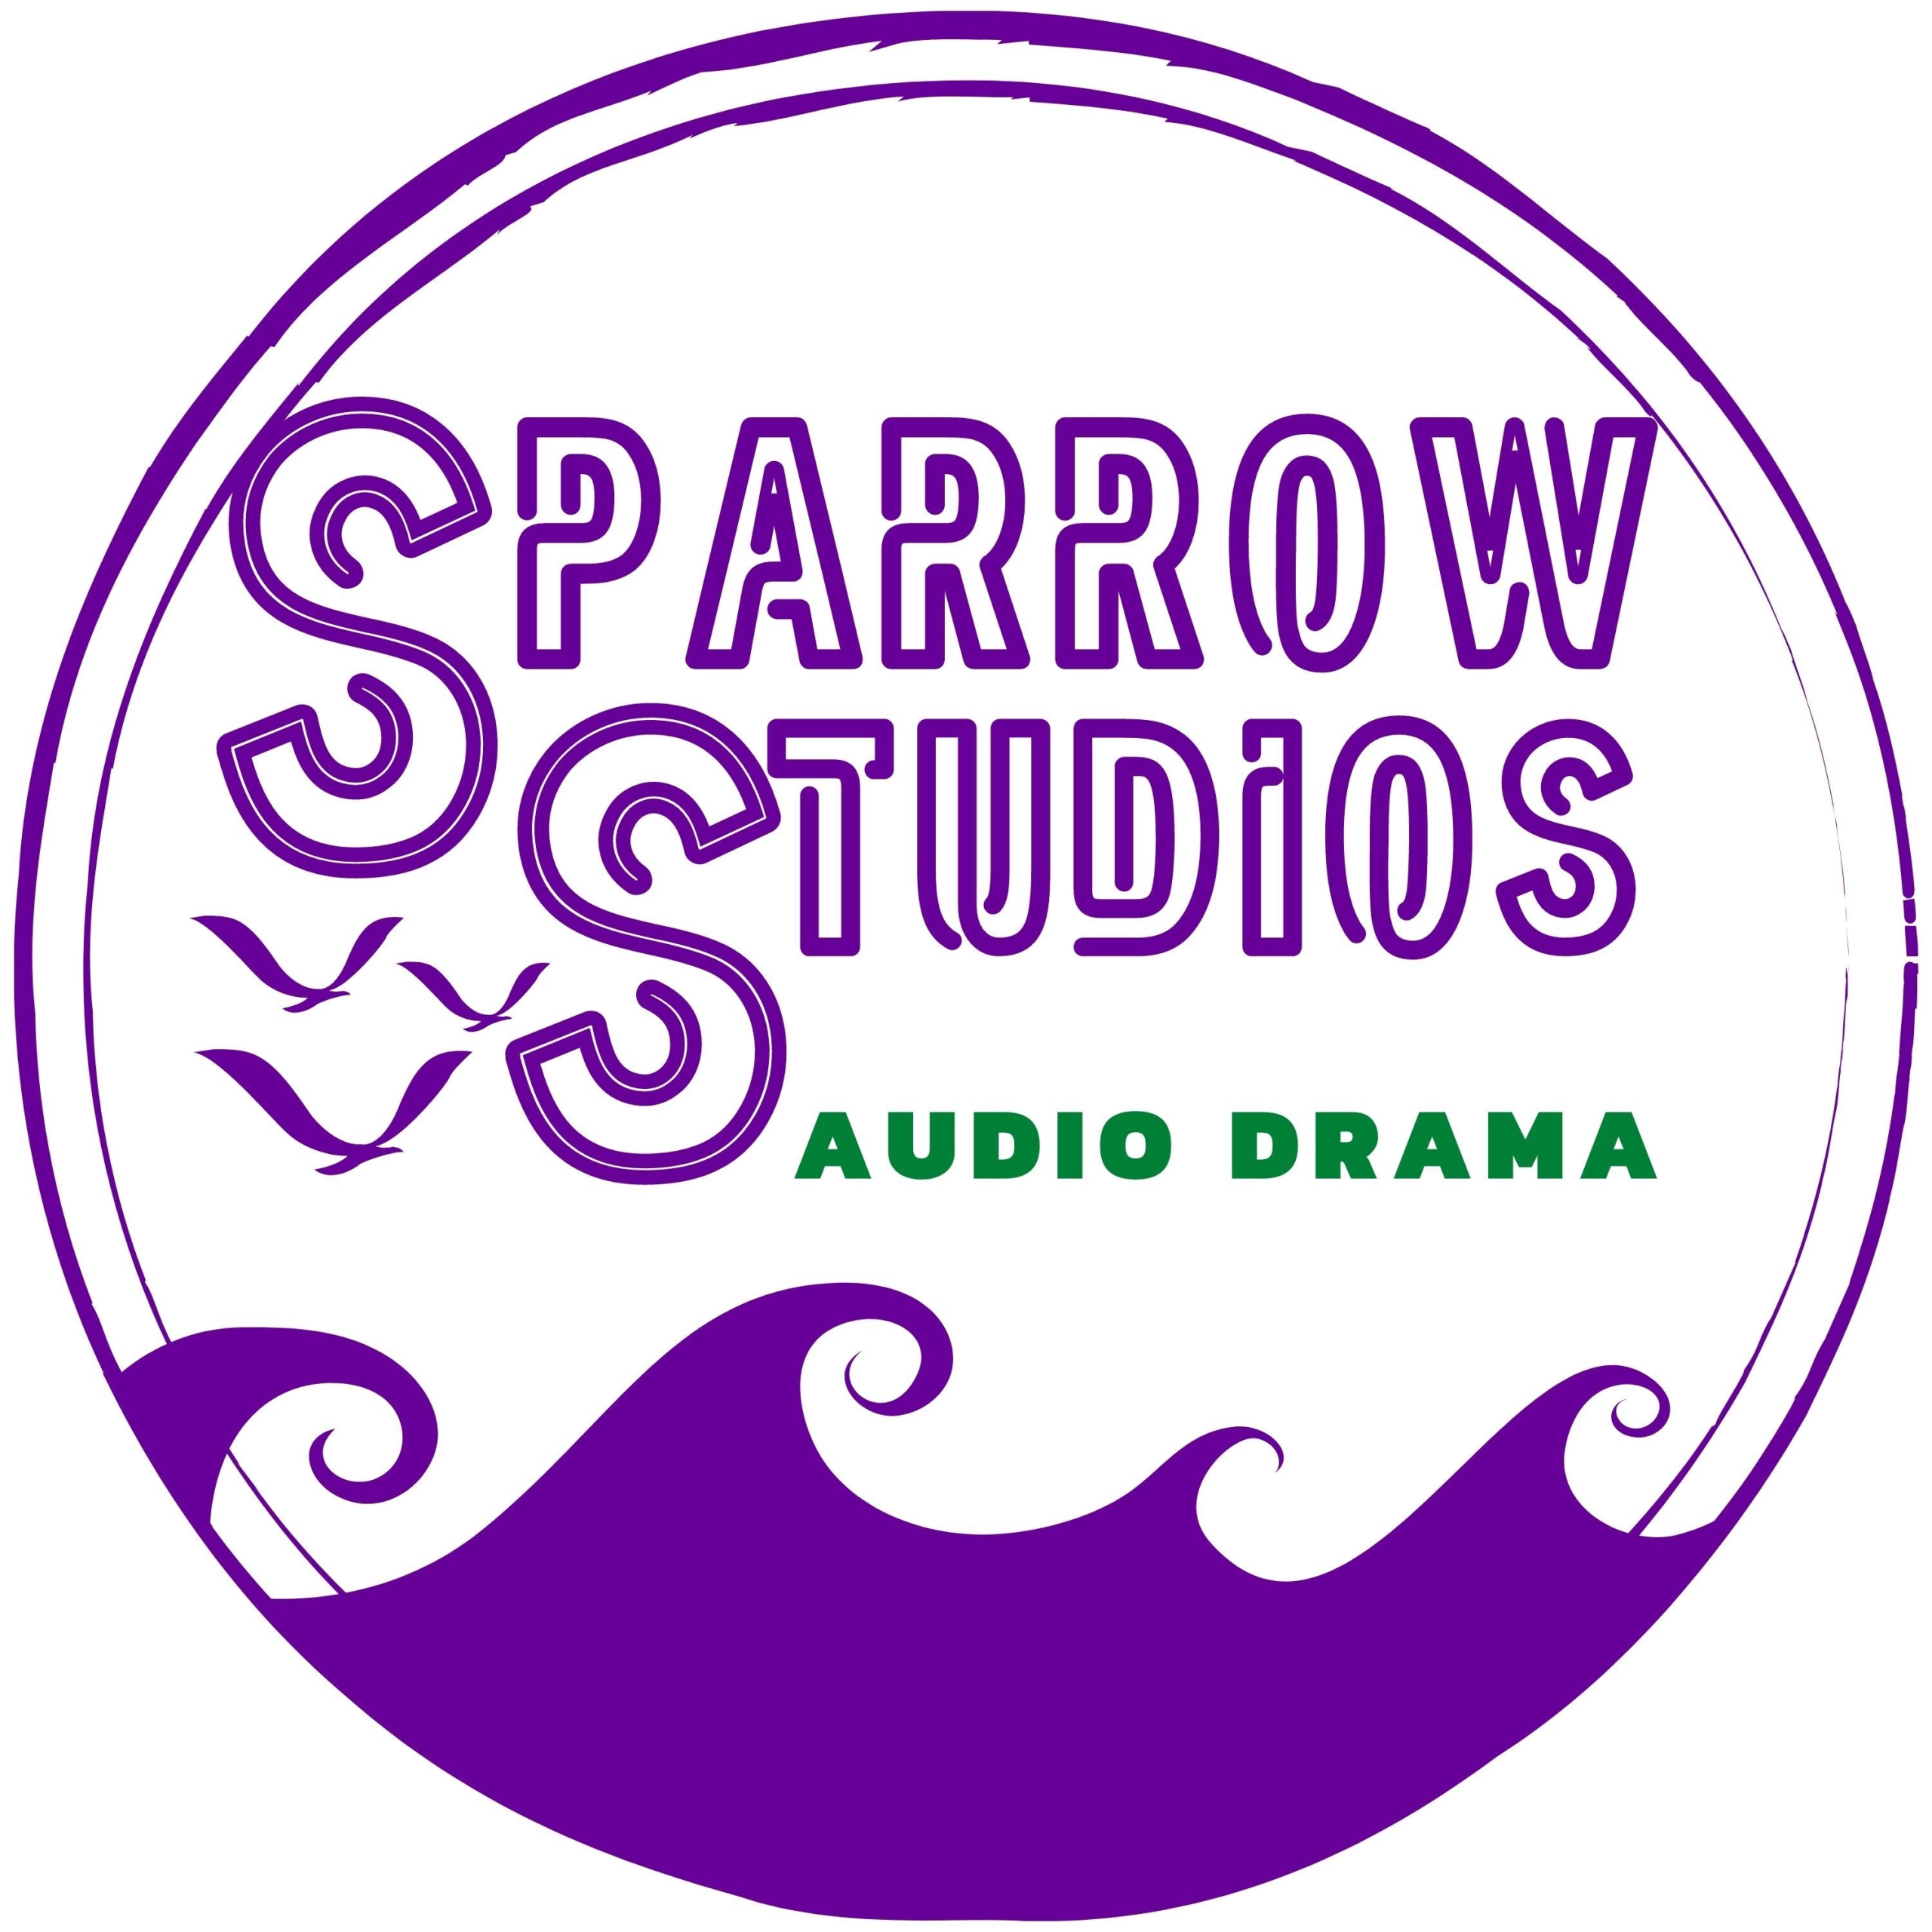 Sparrow Studios Audio Drama